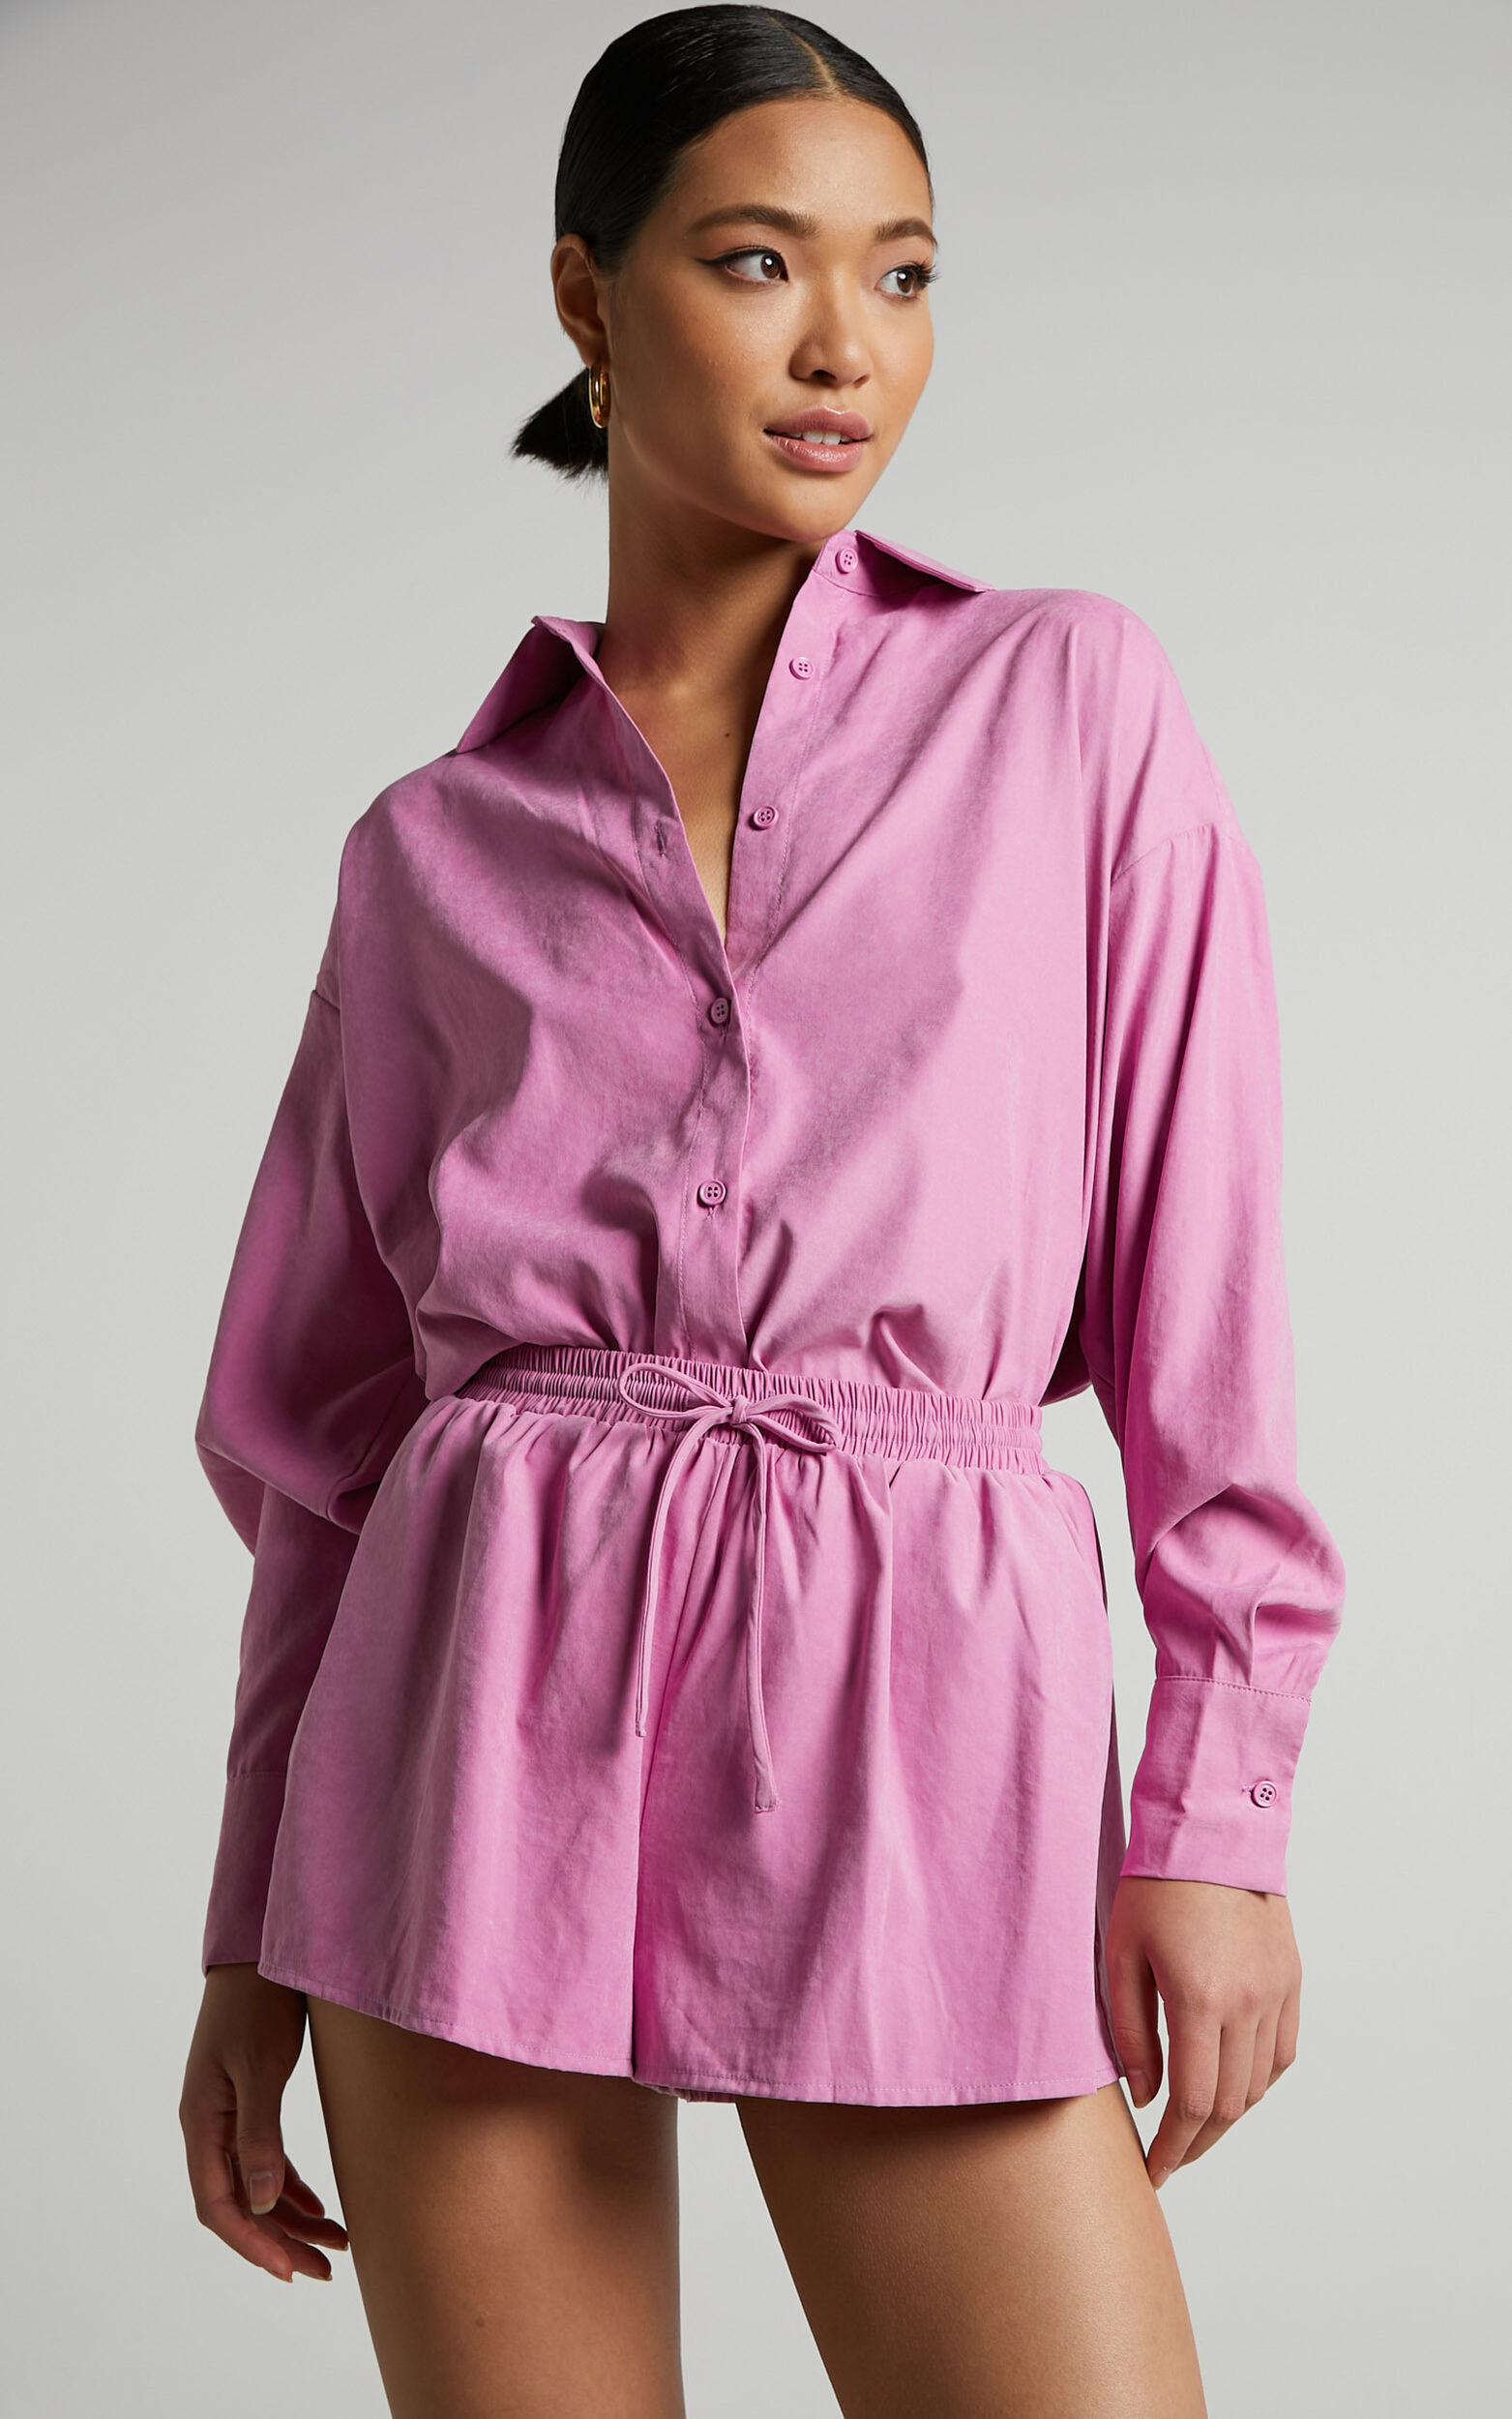 Niobe Shirt - Relaxed Button Up Long Sleeve Shirt in Pink - 04, PNK1